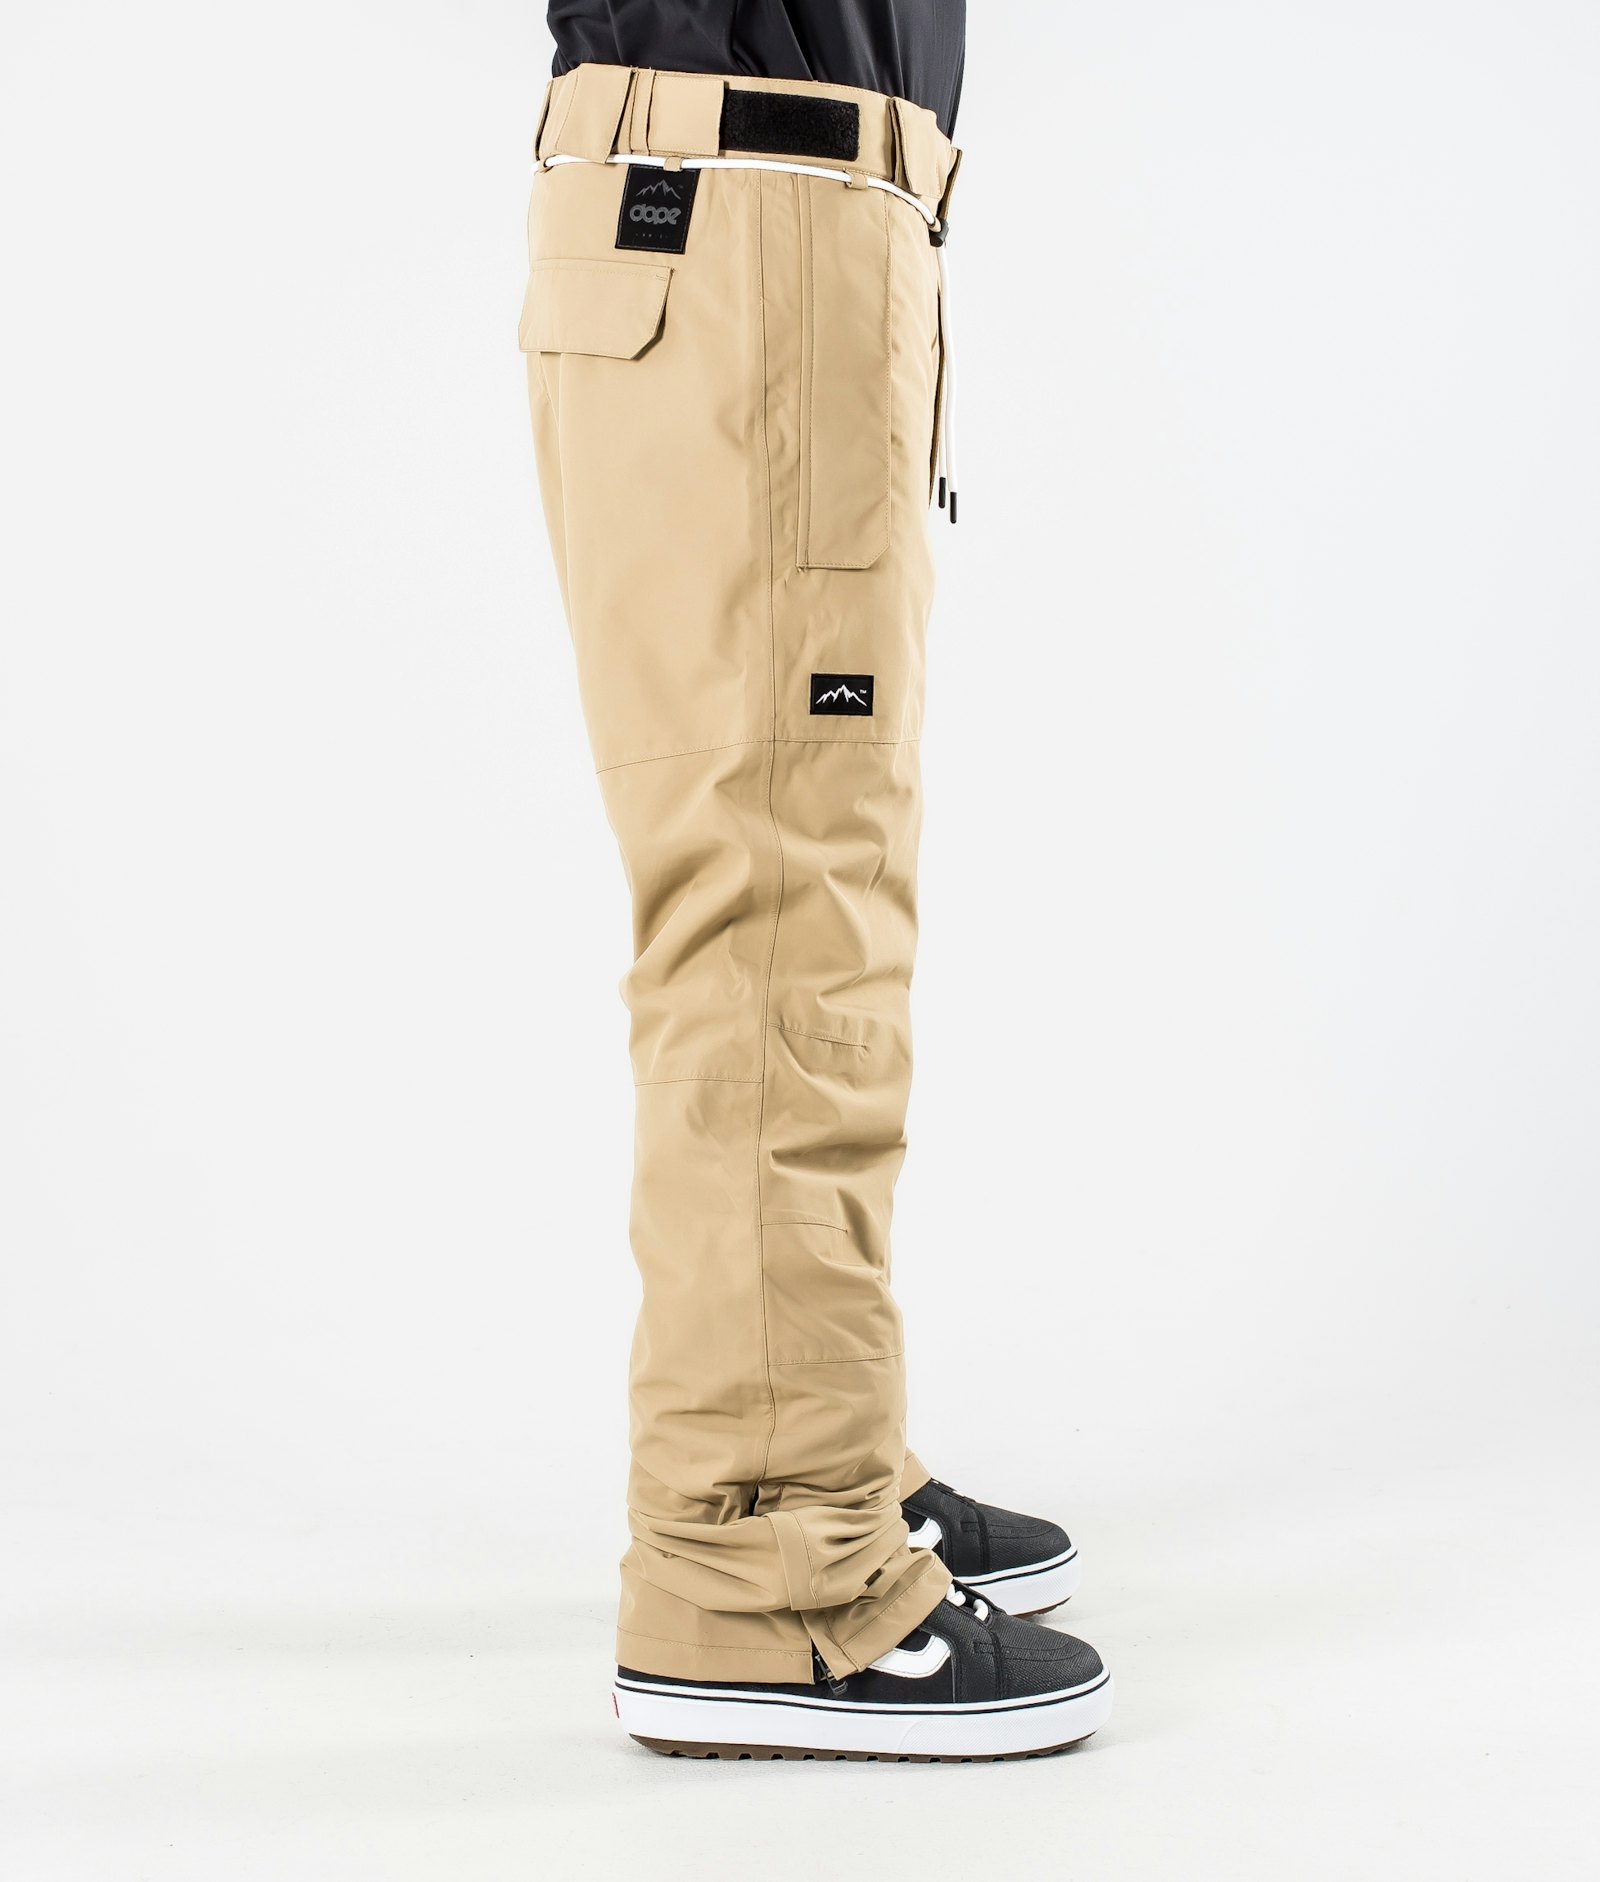 Classic Pantalon de Snowboard Homme Khaki